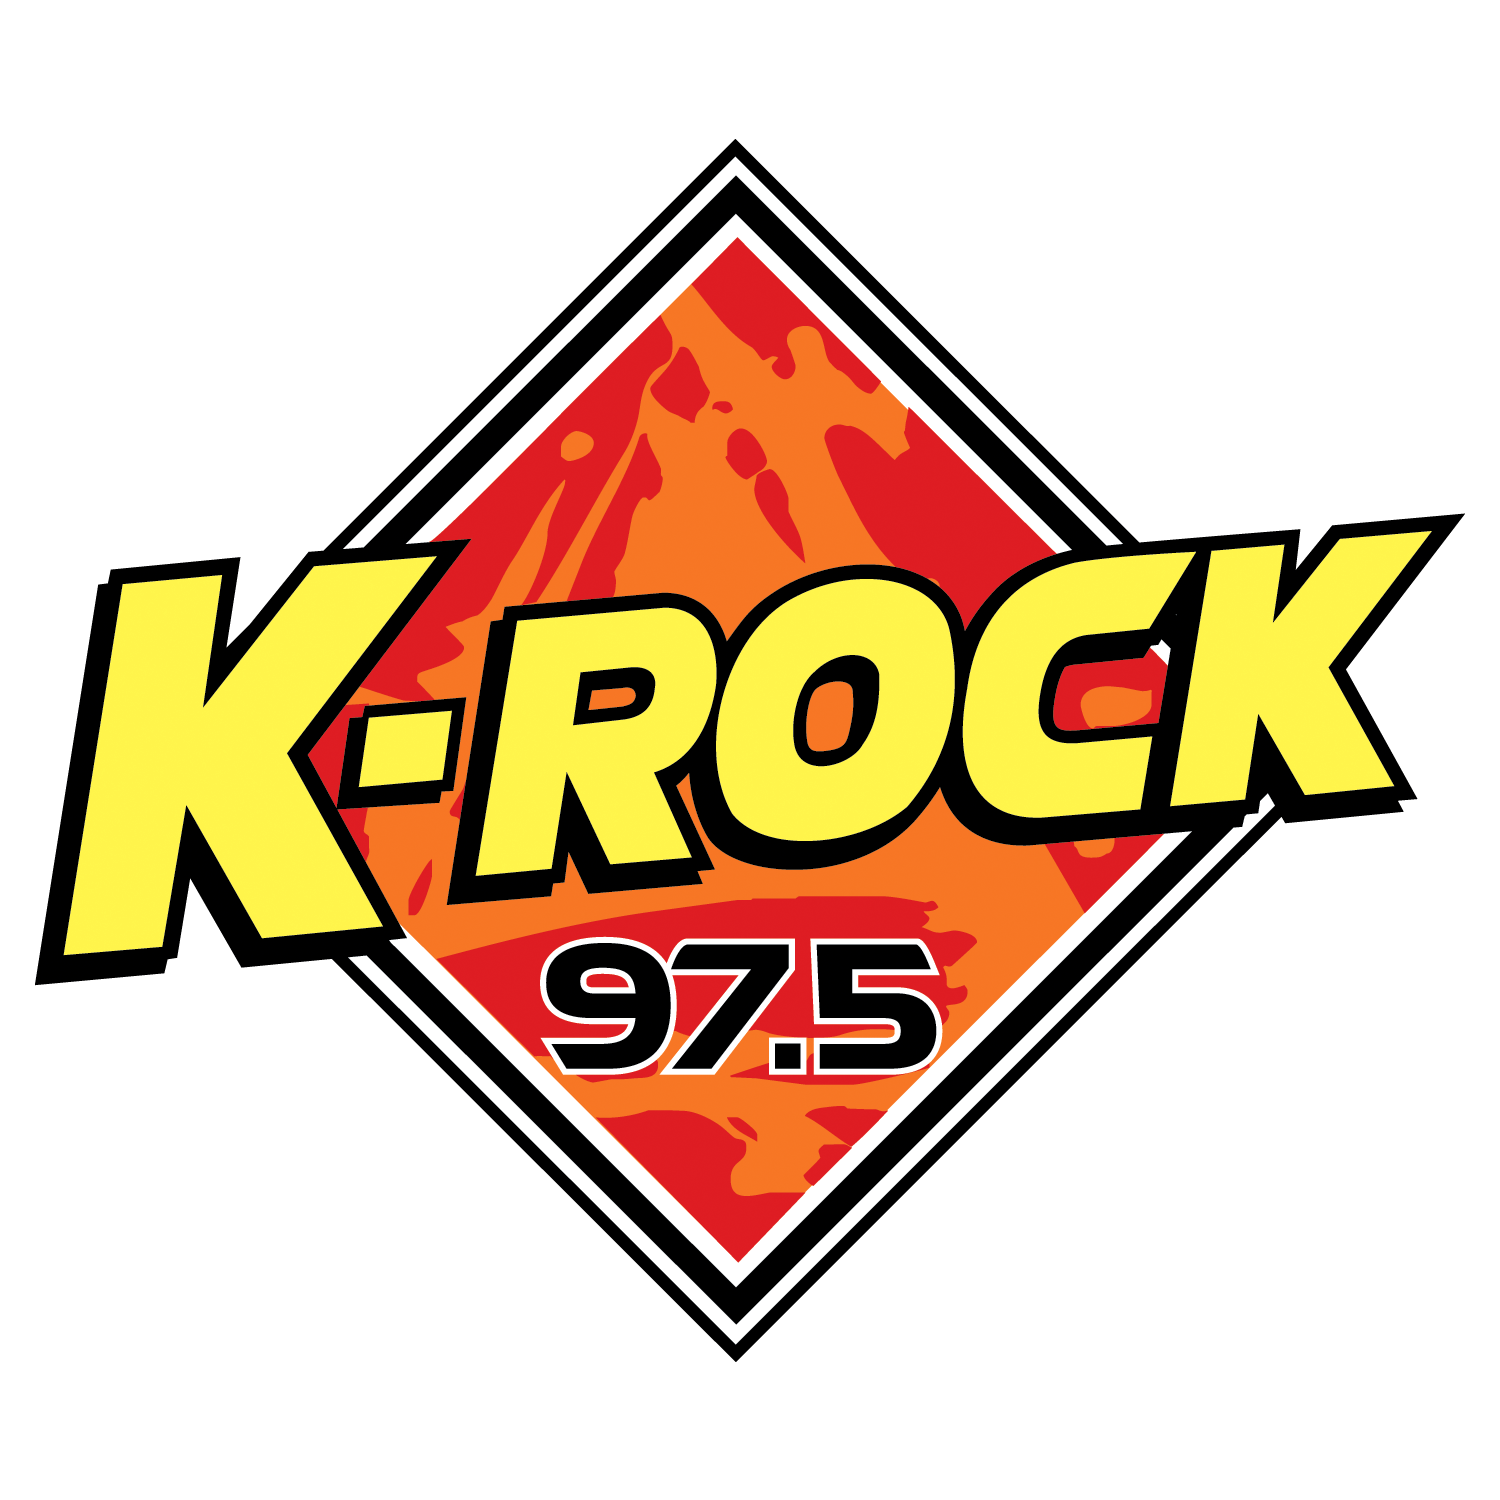 K-Rock Logo - 97.5 K ROCK Logos. K Rock 975